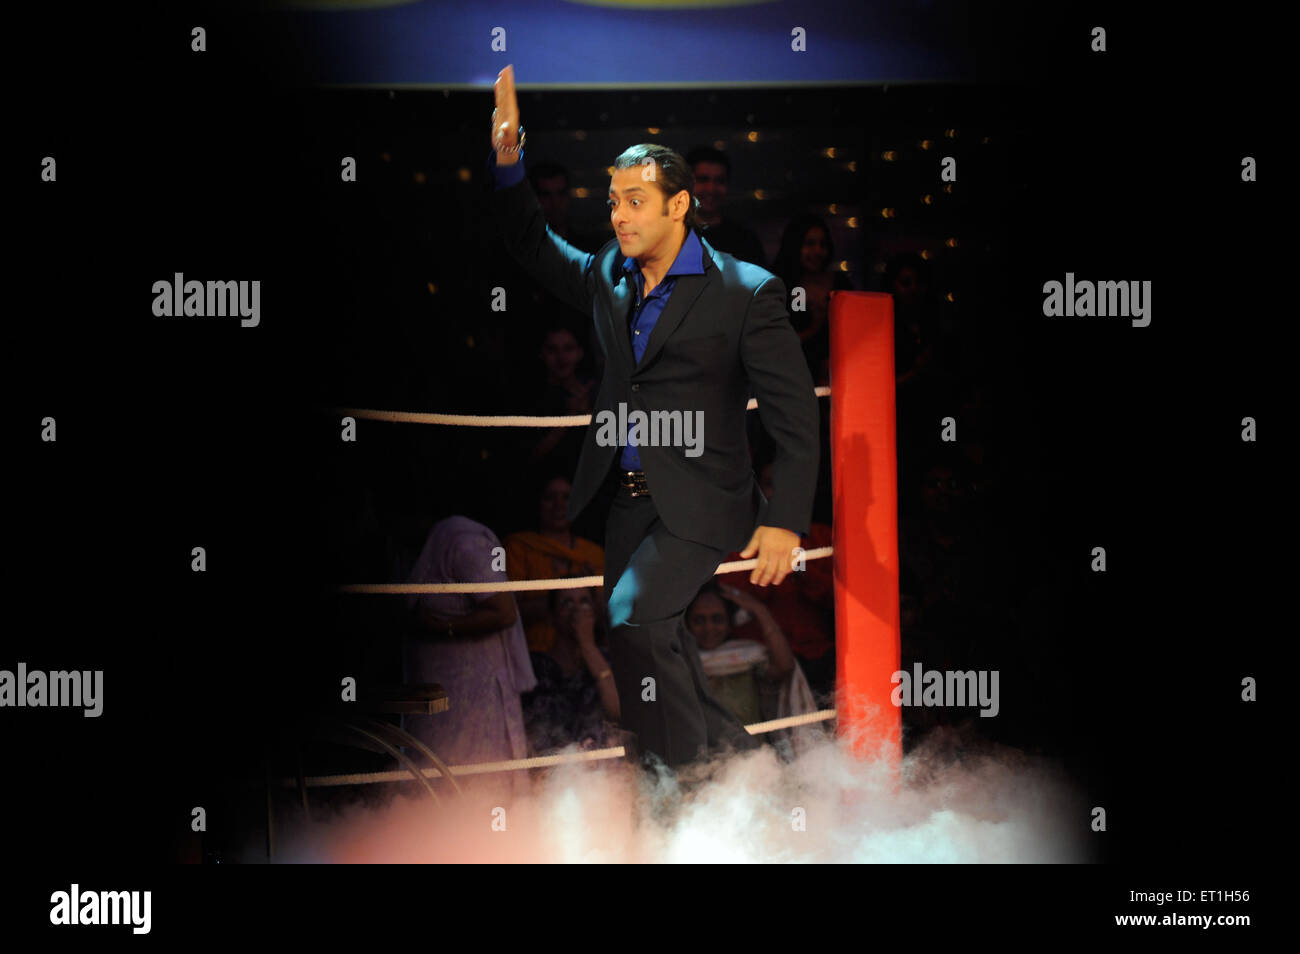 Salman Khan, Dus Ka Dum show, Abdul Rashid Salim Salman Khan, attore indiano, produttore cinematografico, personalità televisiva, India, Asia Foto Stock